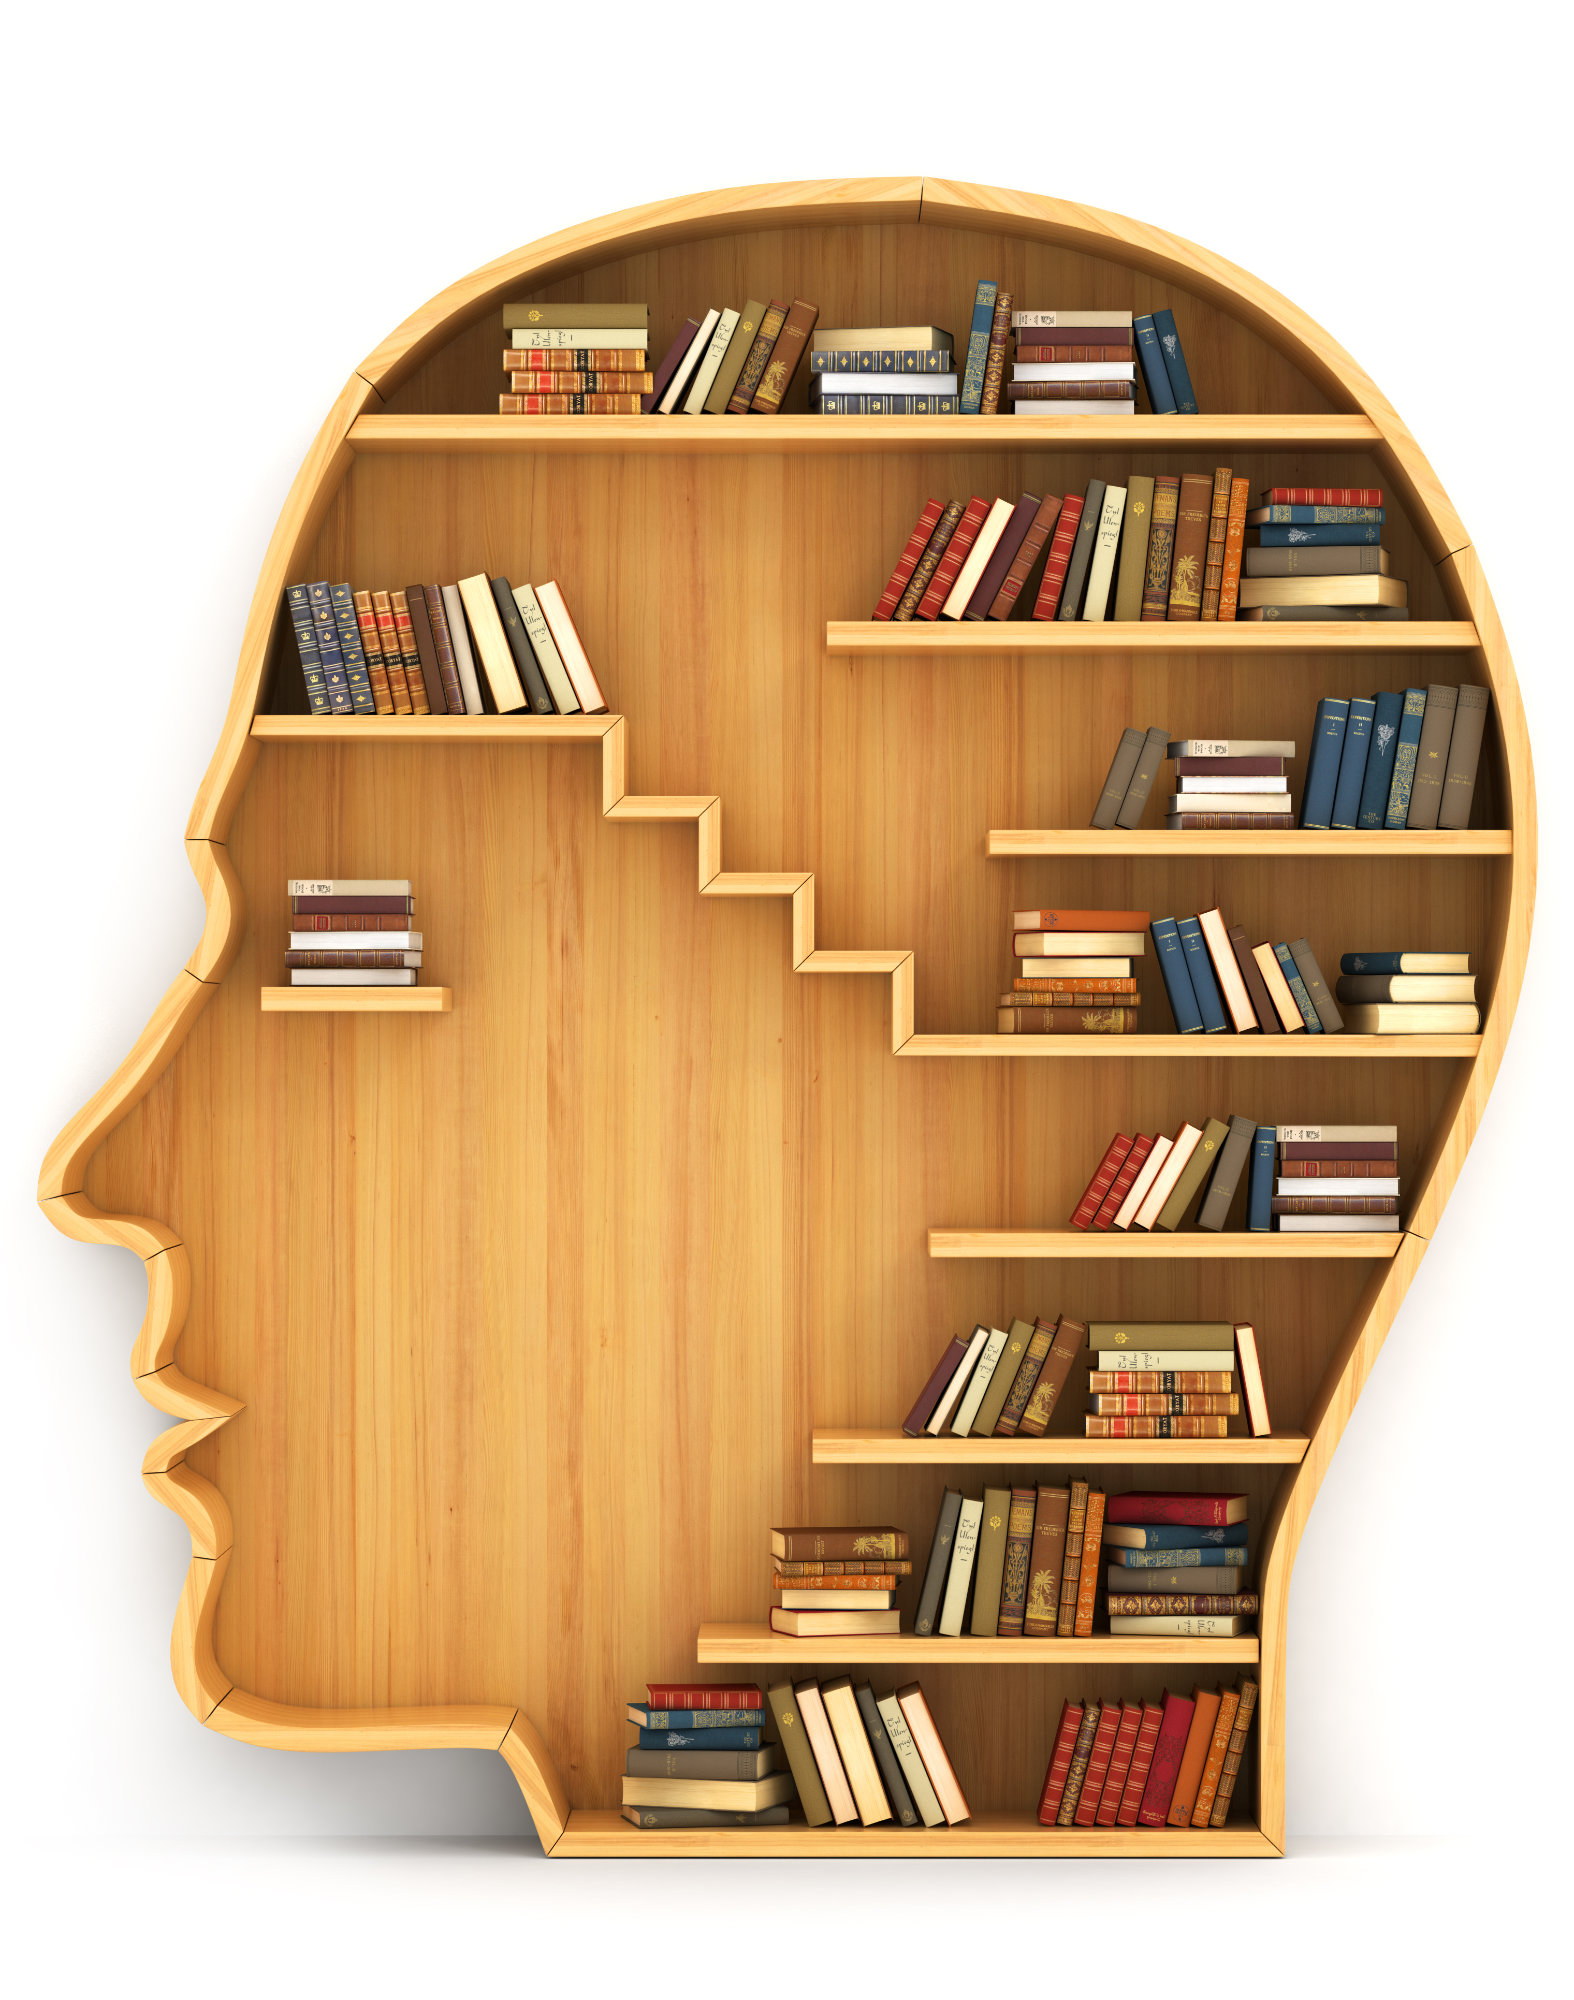 Bookshelf inside the mind